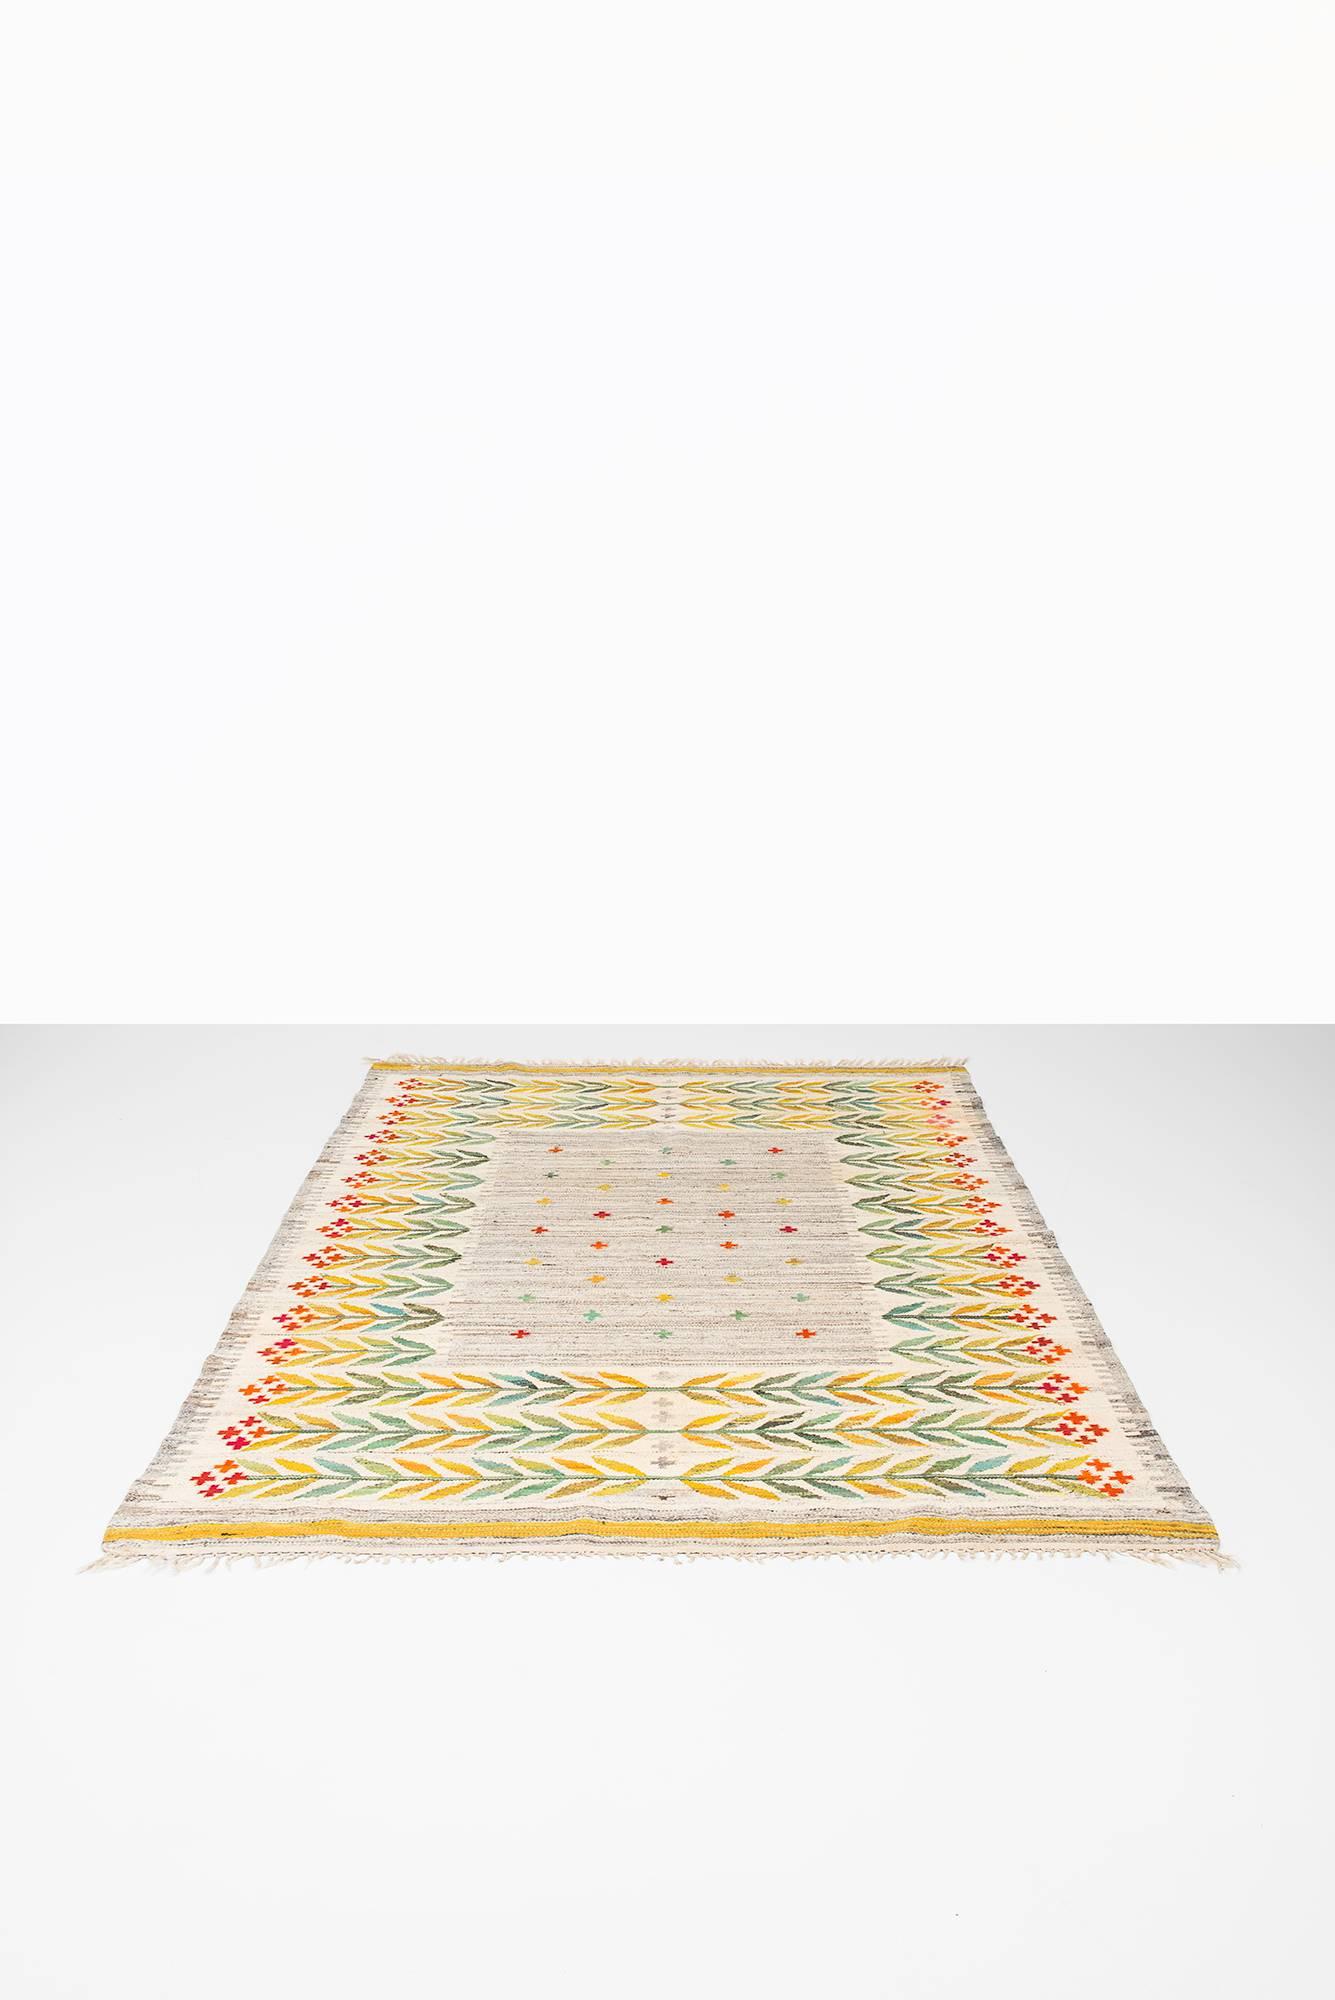 Mid-20th Century Rölakan Carpet by Wanda Krakow in Poland